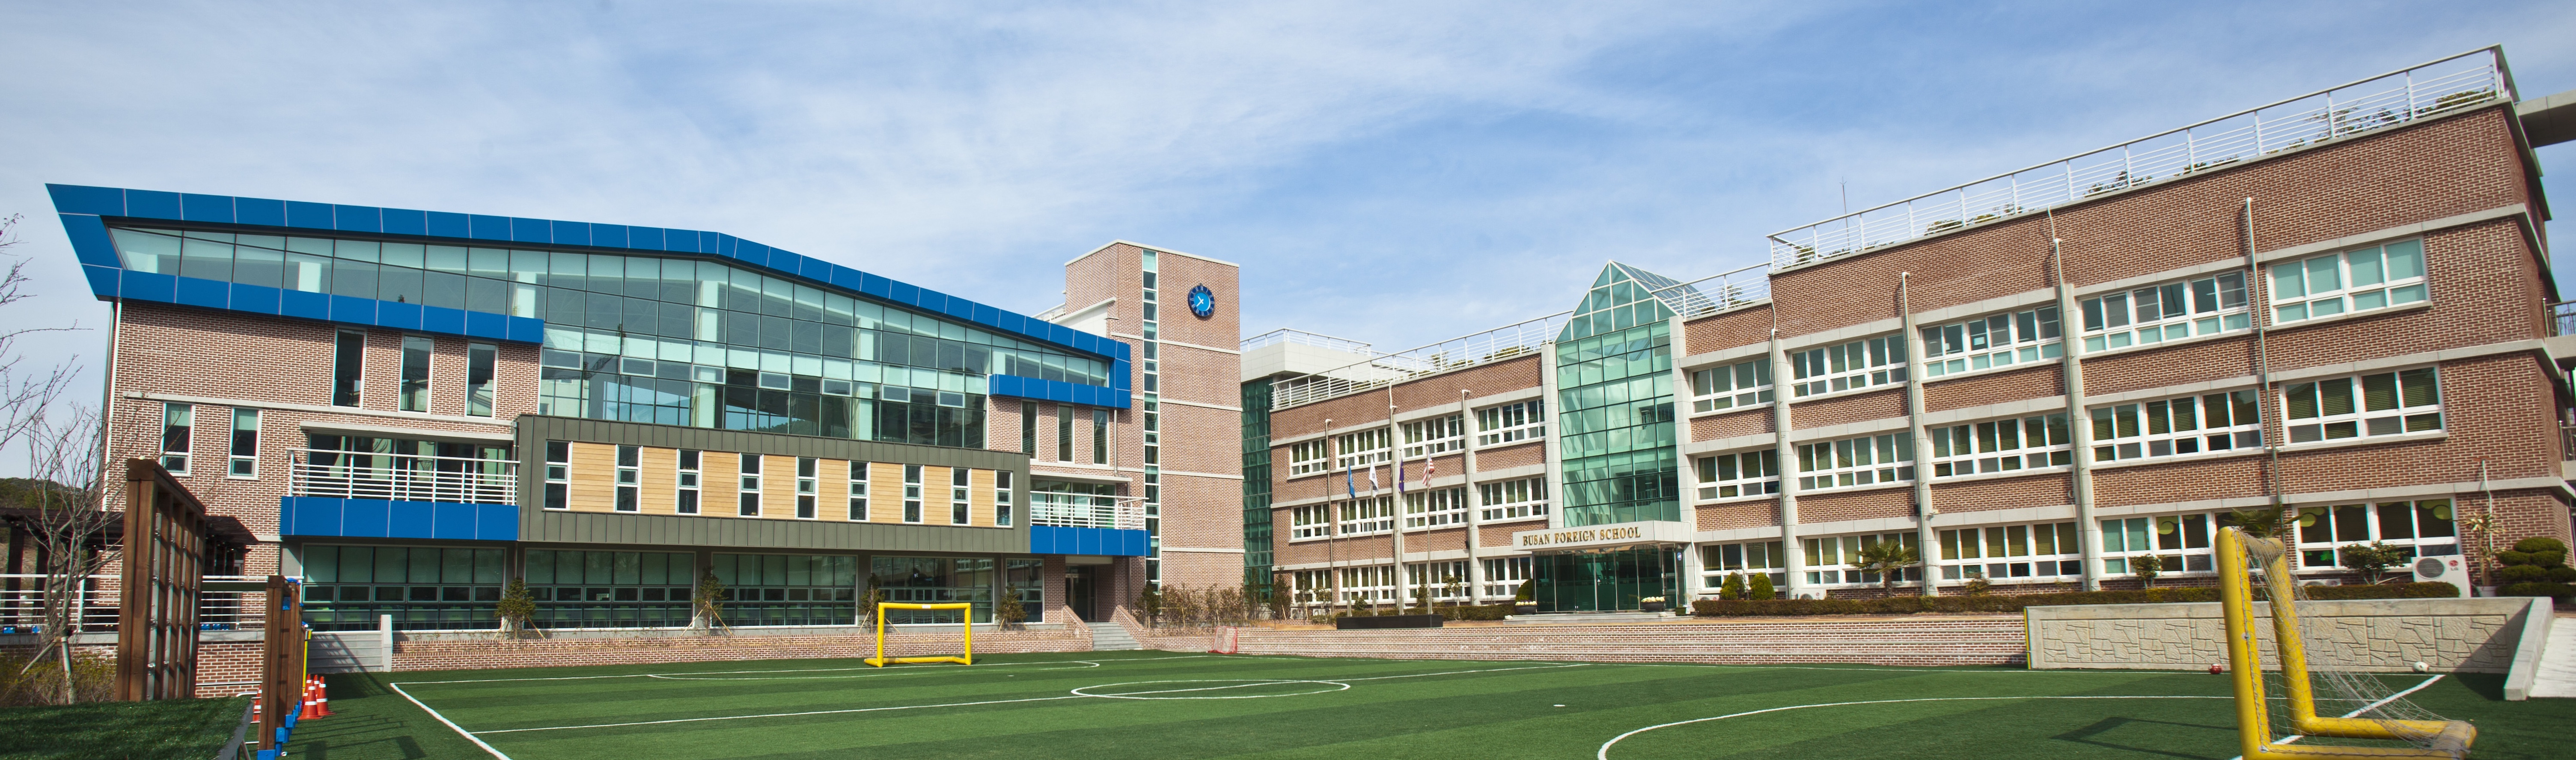 Школы в Корее архитектура